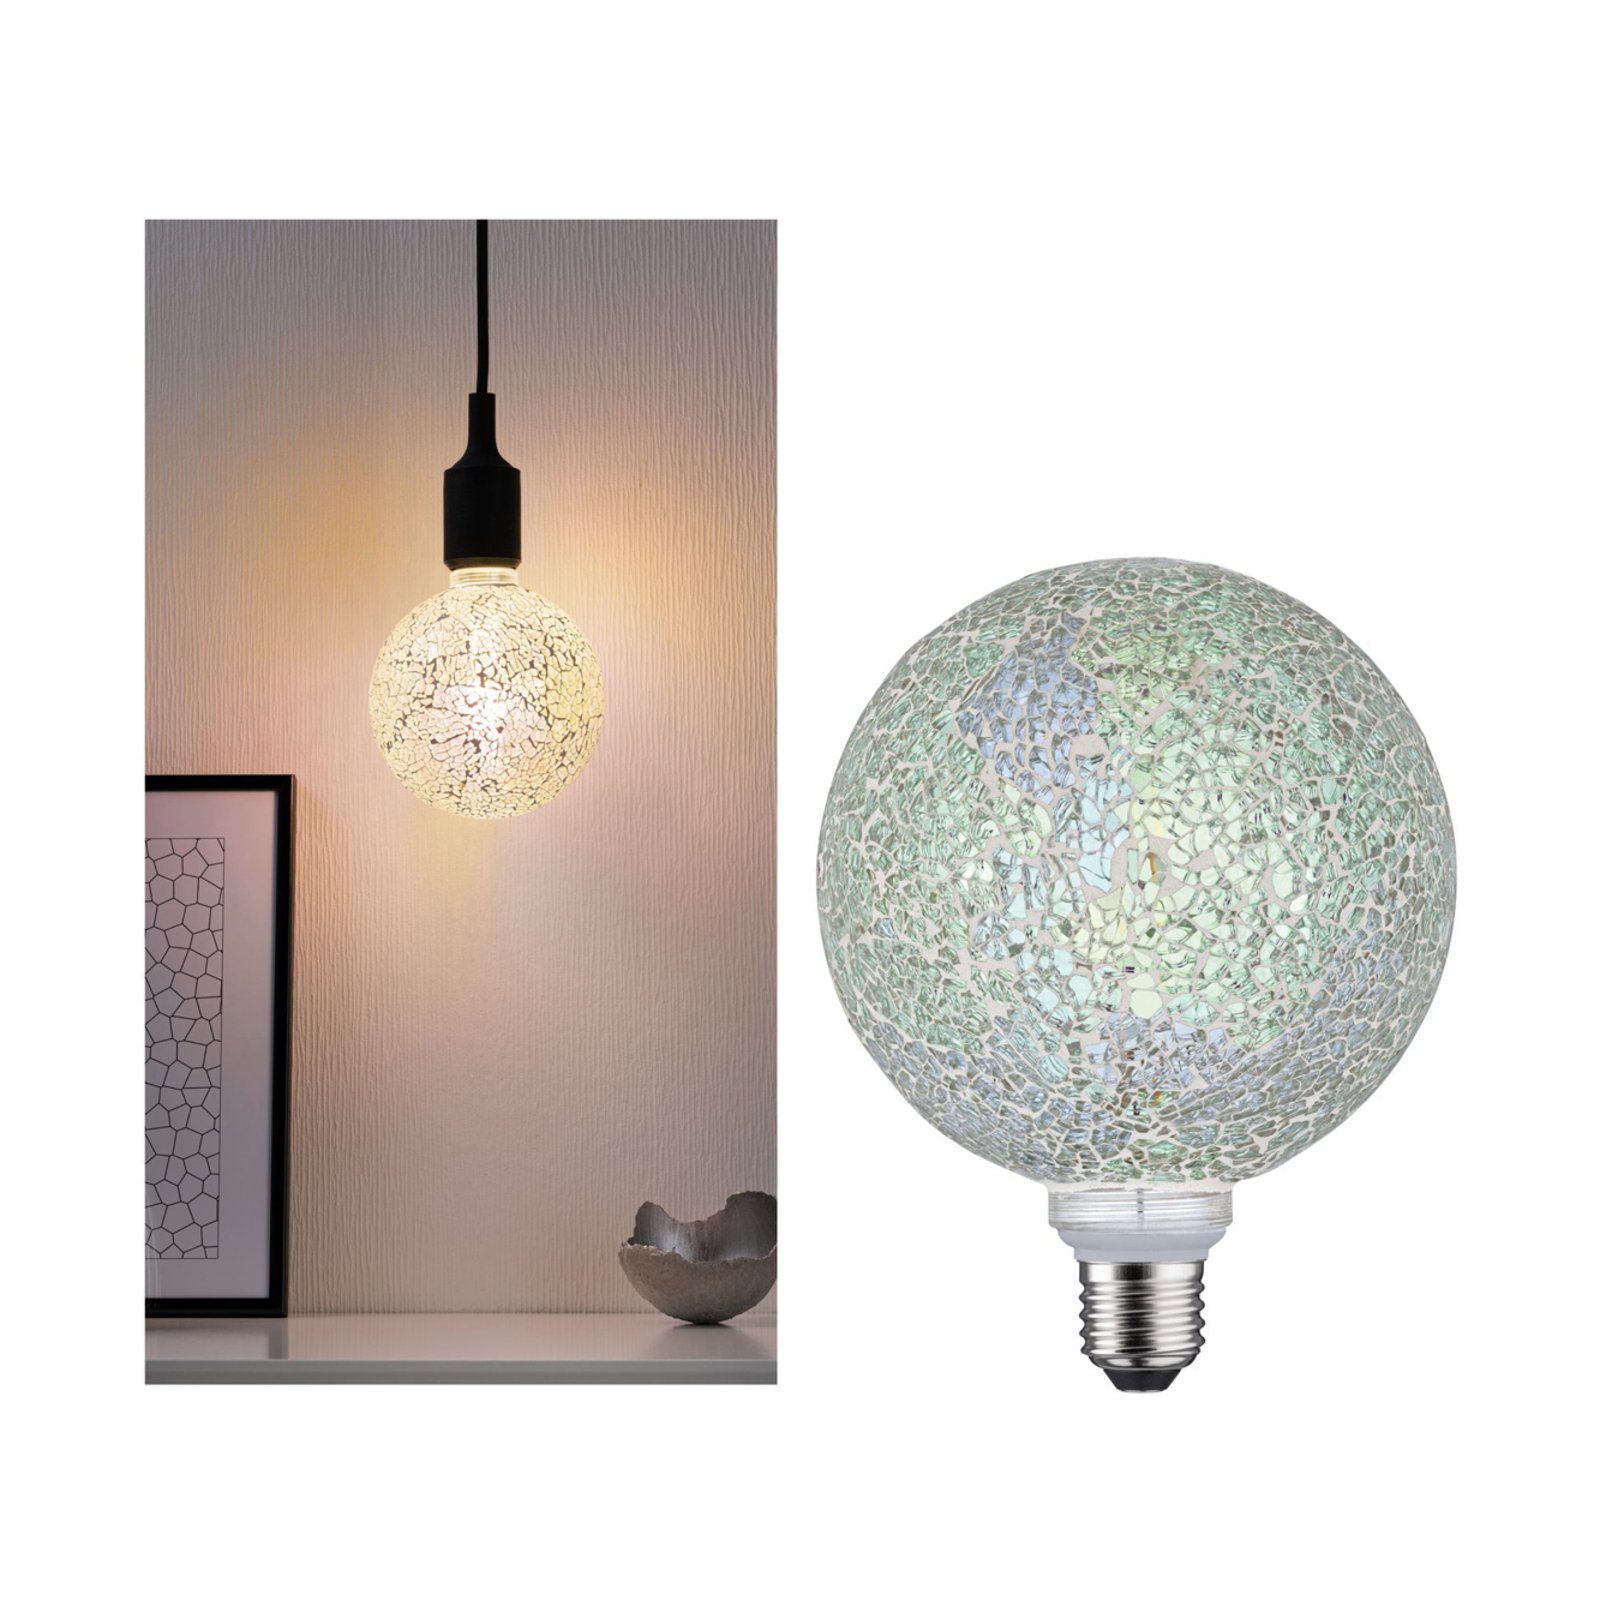 Paulmann E27 LED-Globe 5W Miracle Mosaic weiß